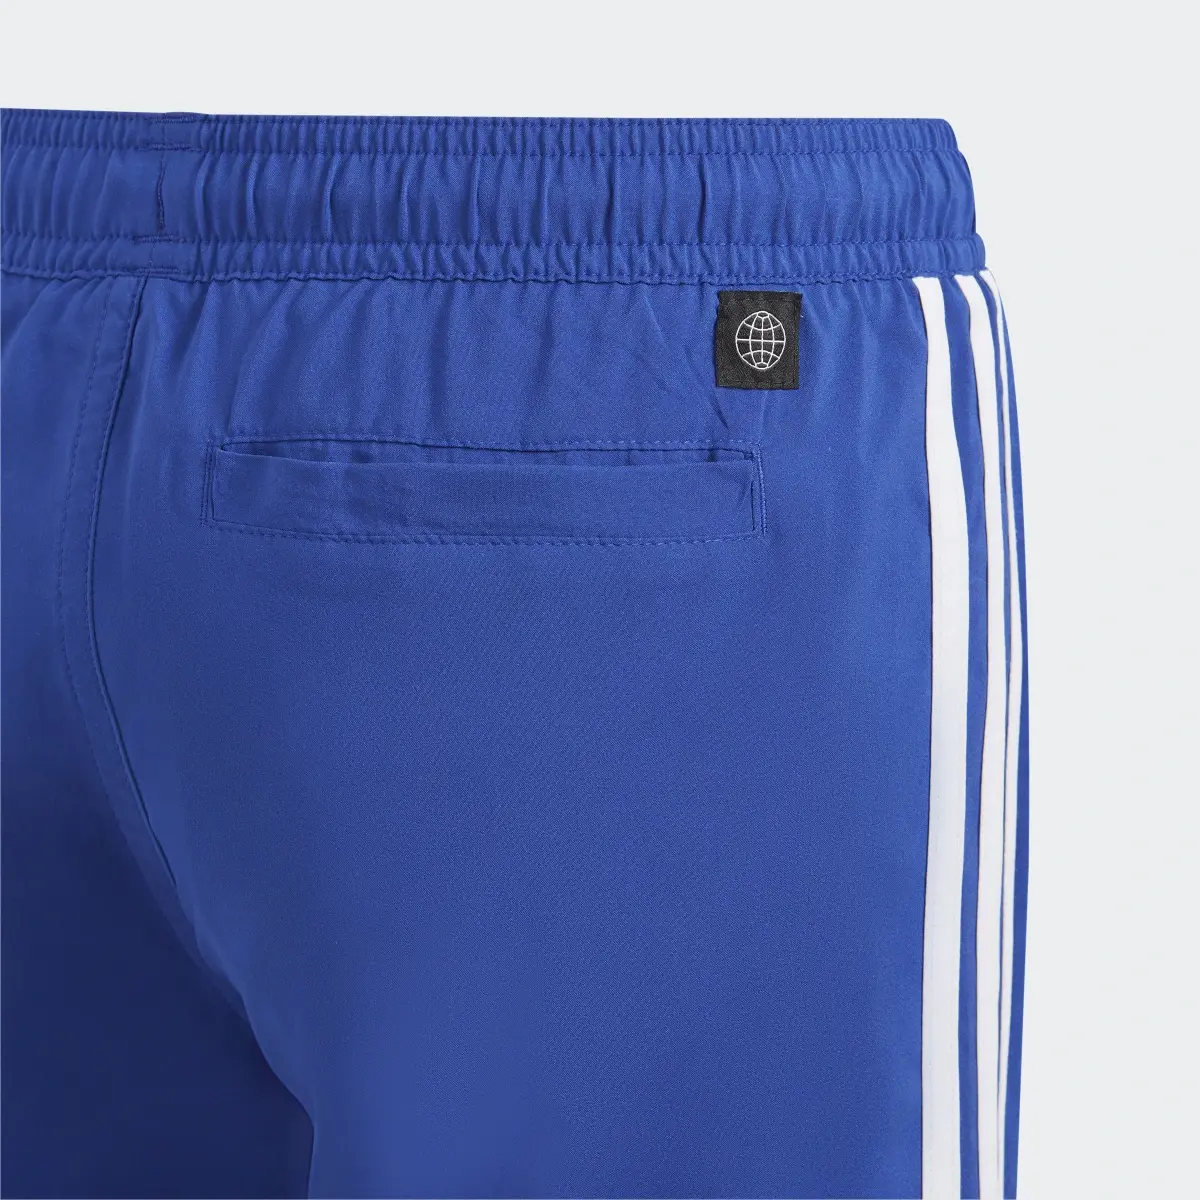 Adidas 3-Stripes Swim Shorts. 3